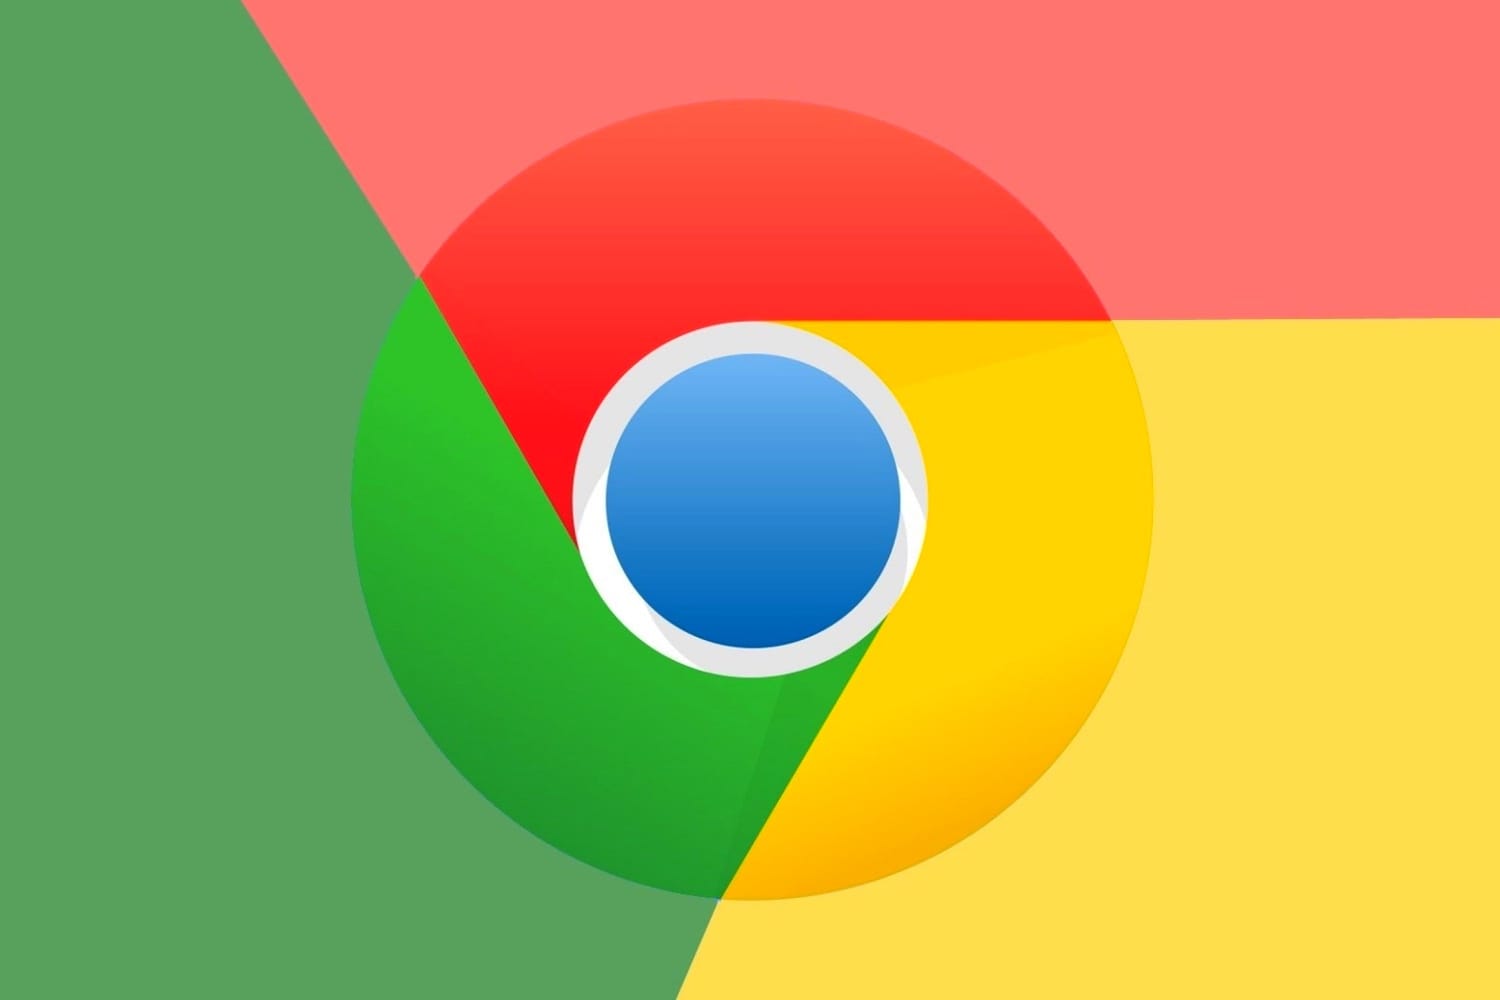 Google Chrome on Windows 10 might soon consume less memory